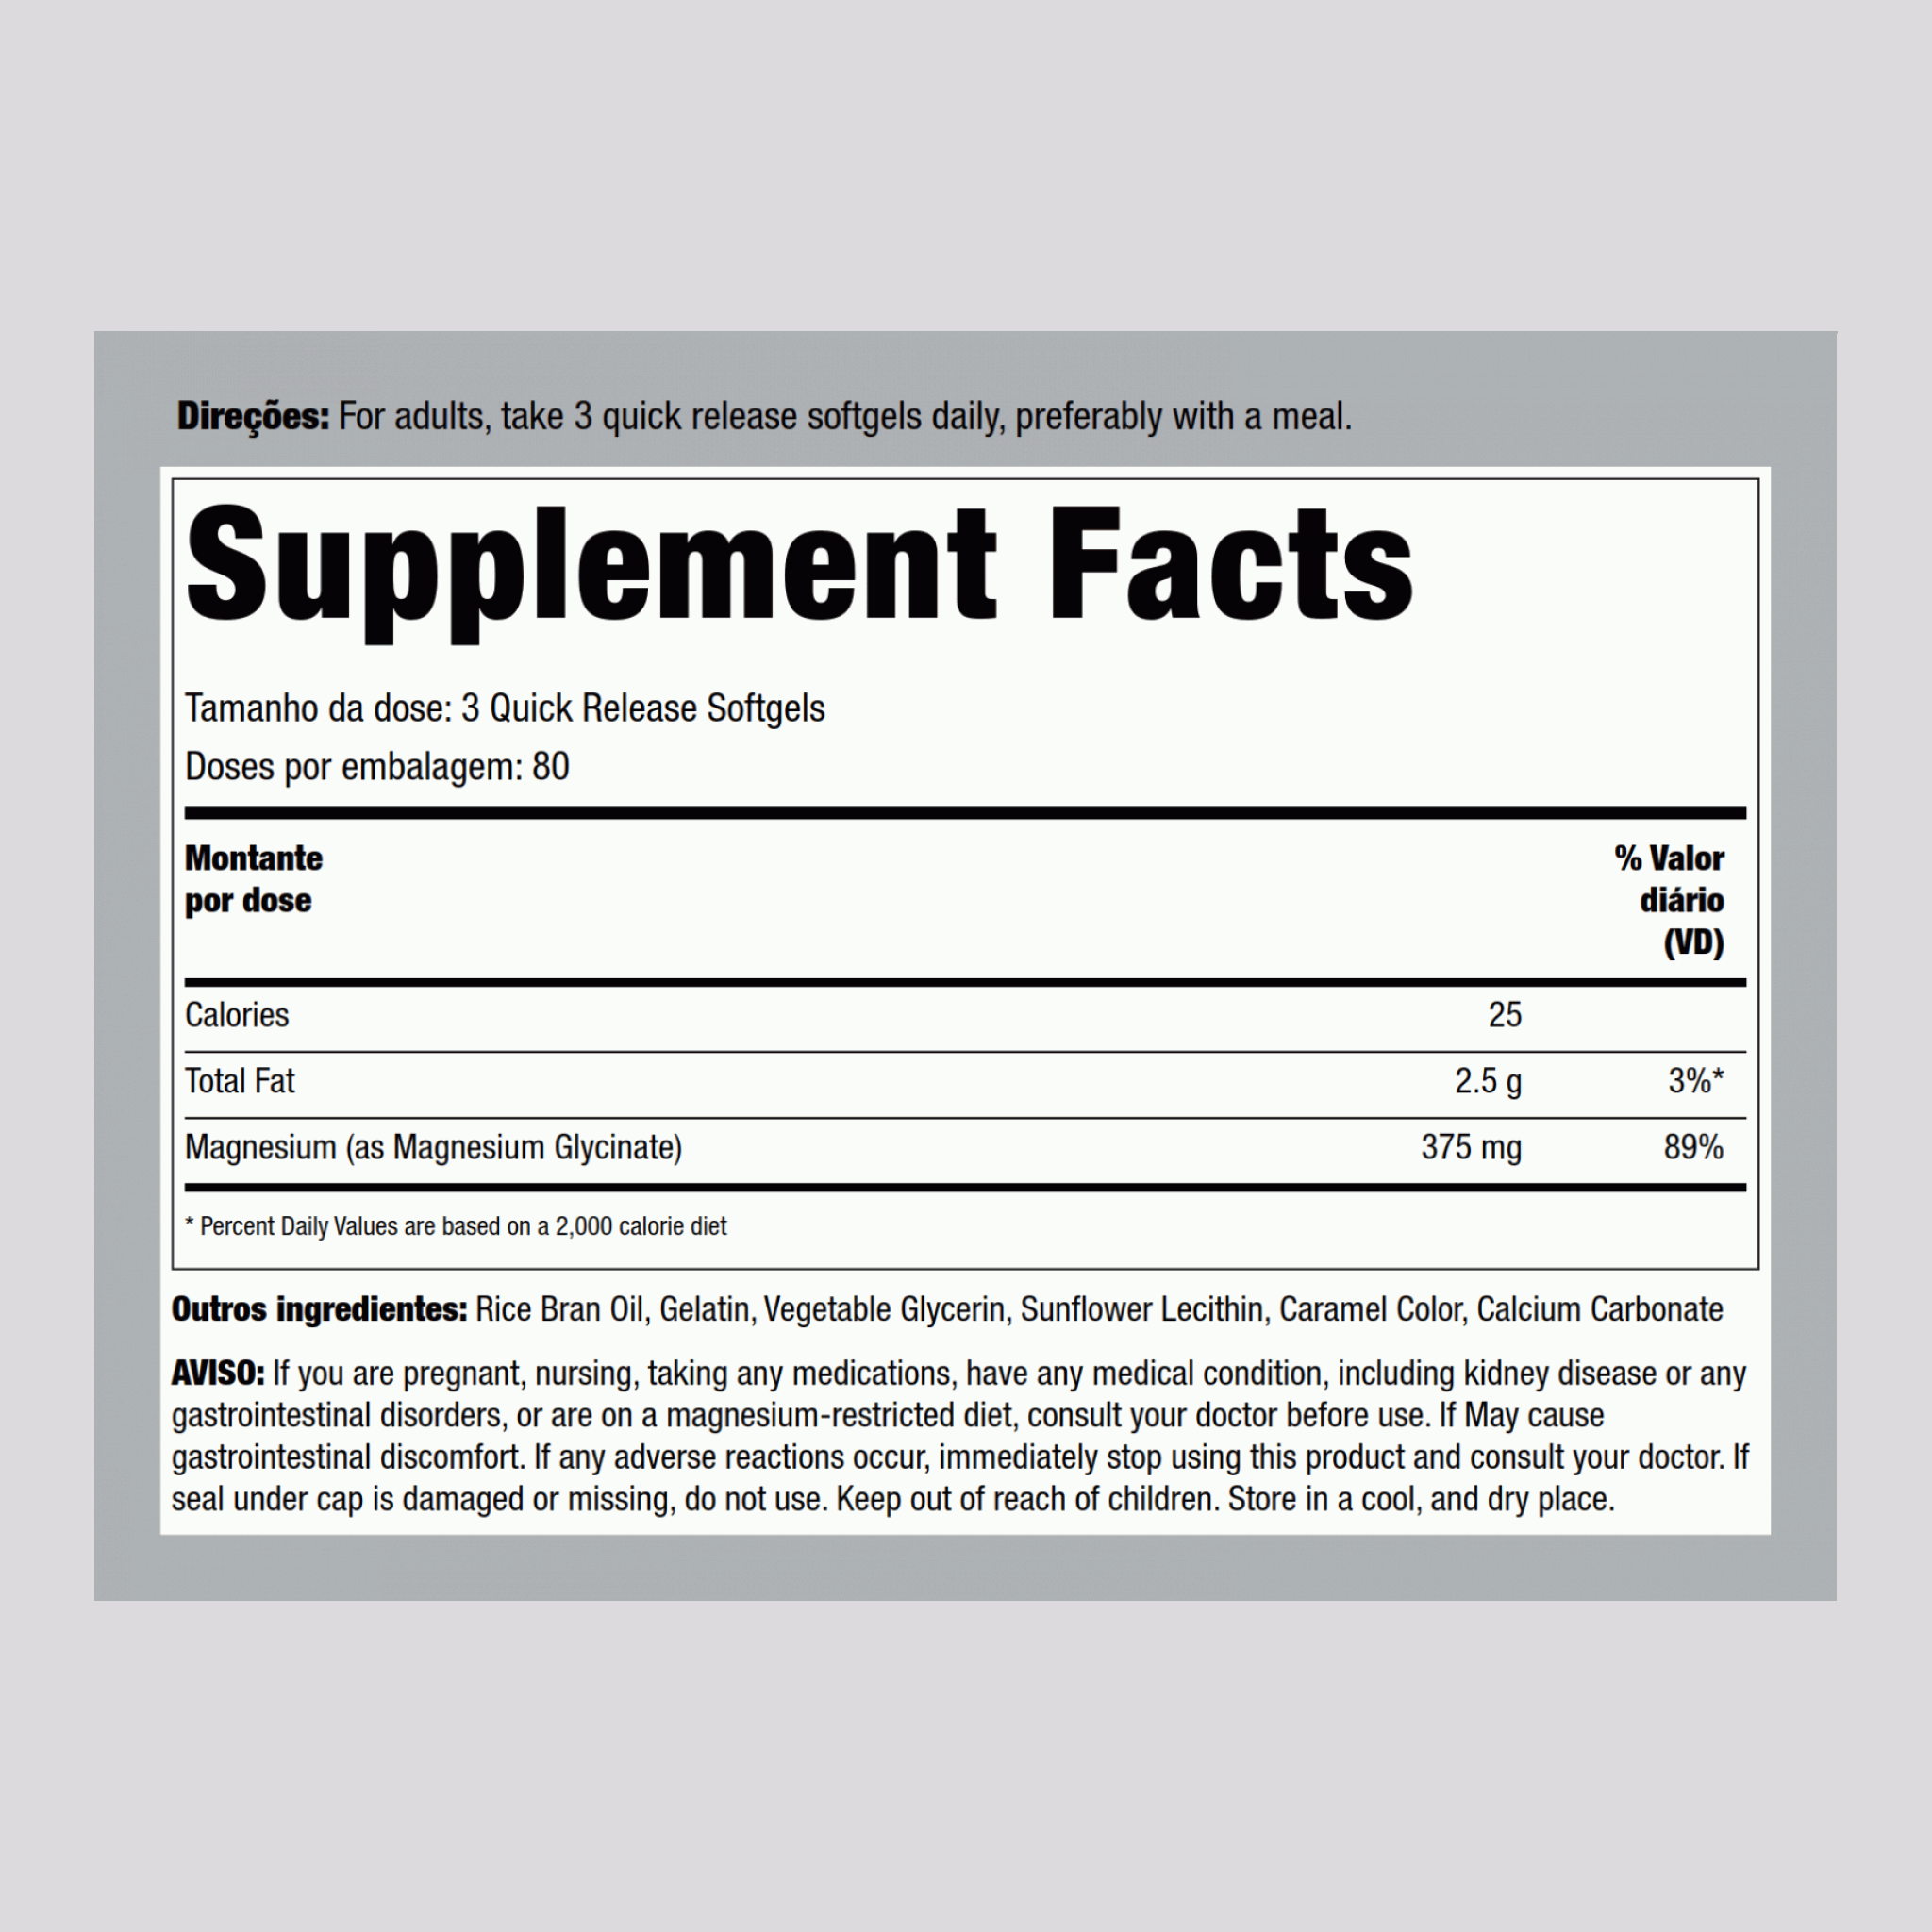 Magnesium Glycinate, 375 mg (per serving), 240 Quick Release Softgels